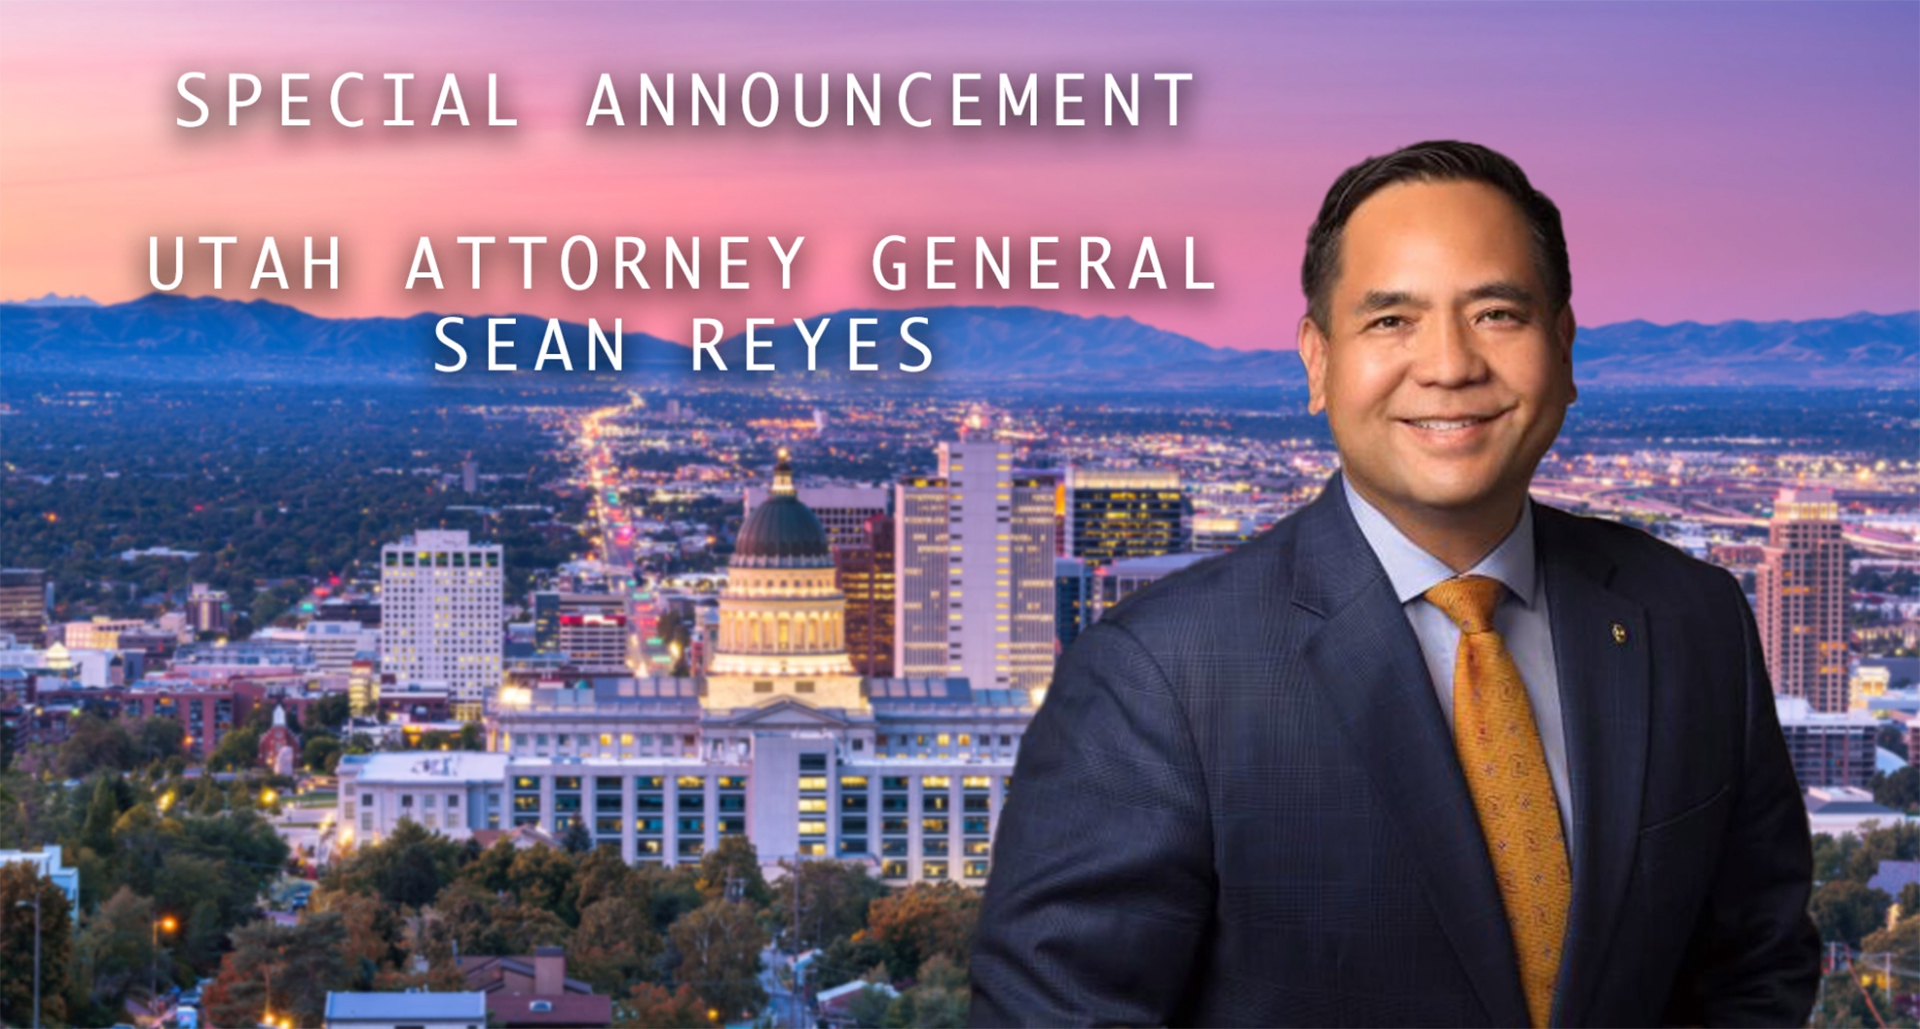 Utah Attorney General Sean Reyes’ Statement on Decision to Not Seek Re-election in 2024